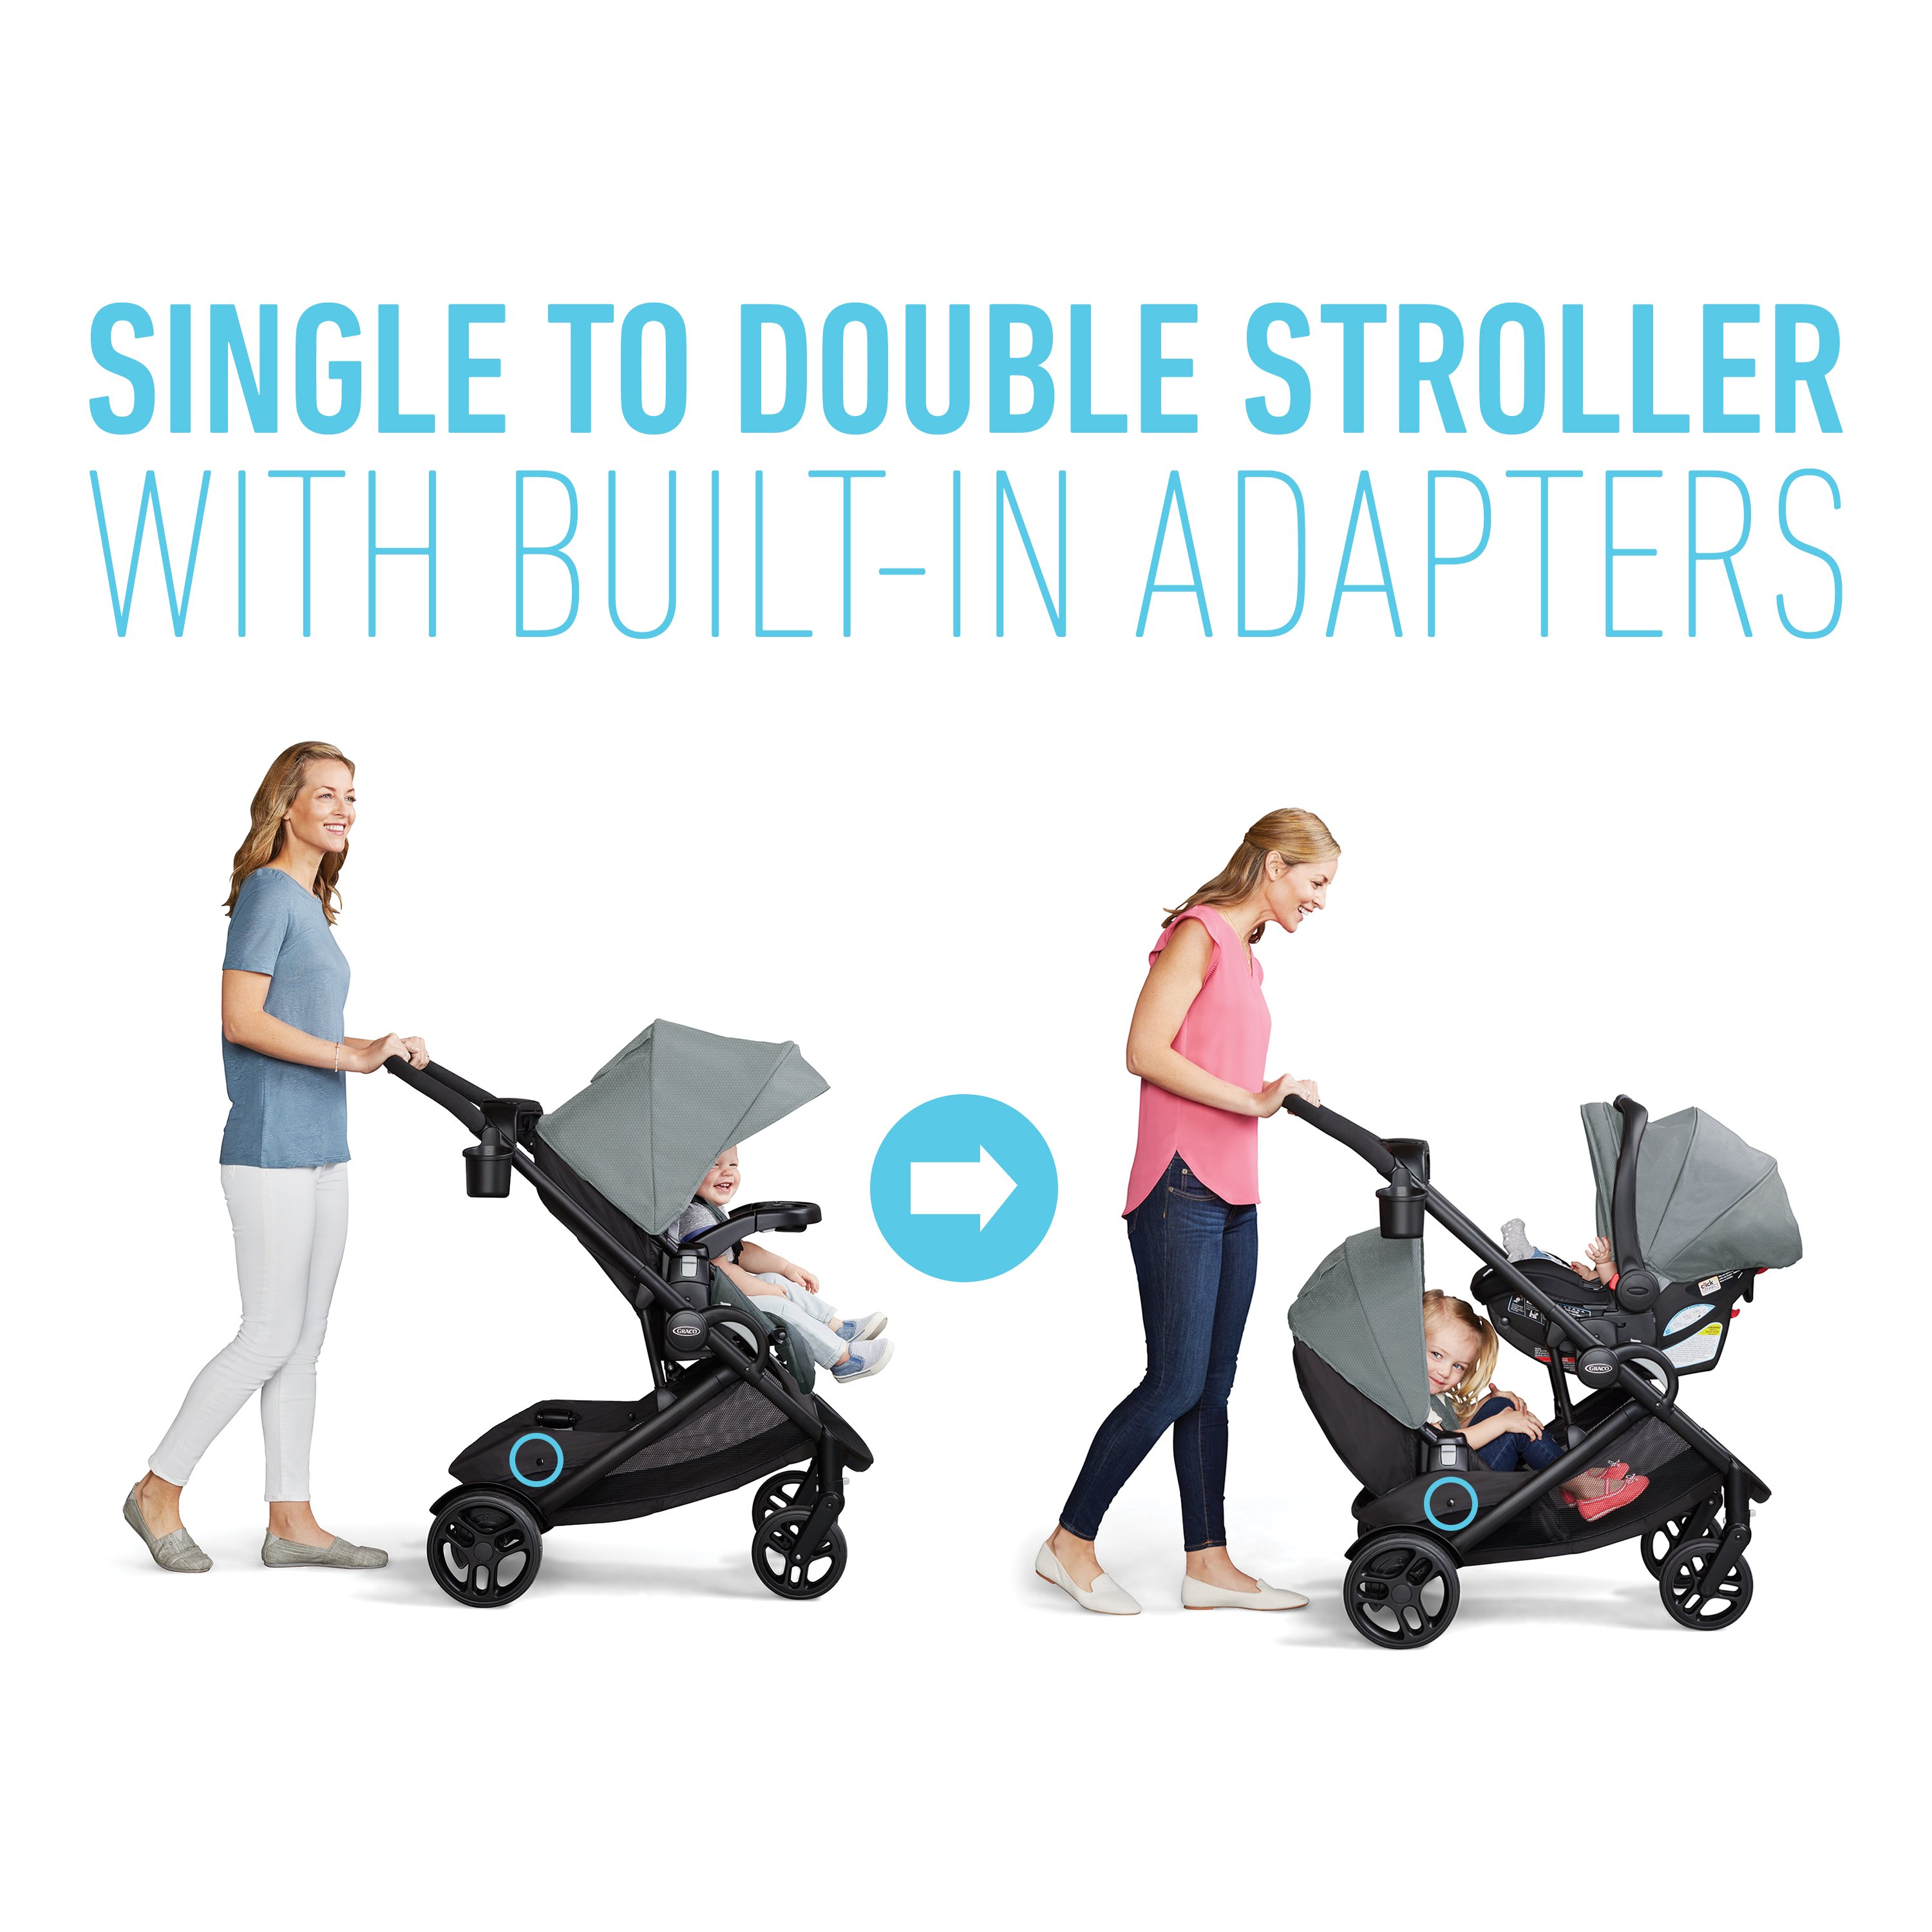 modes to grow stroller